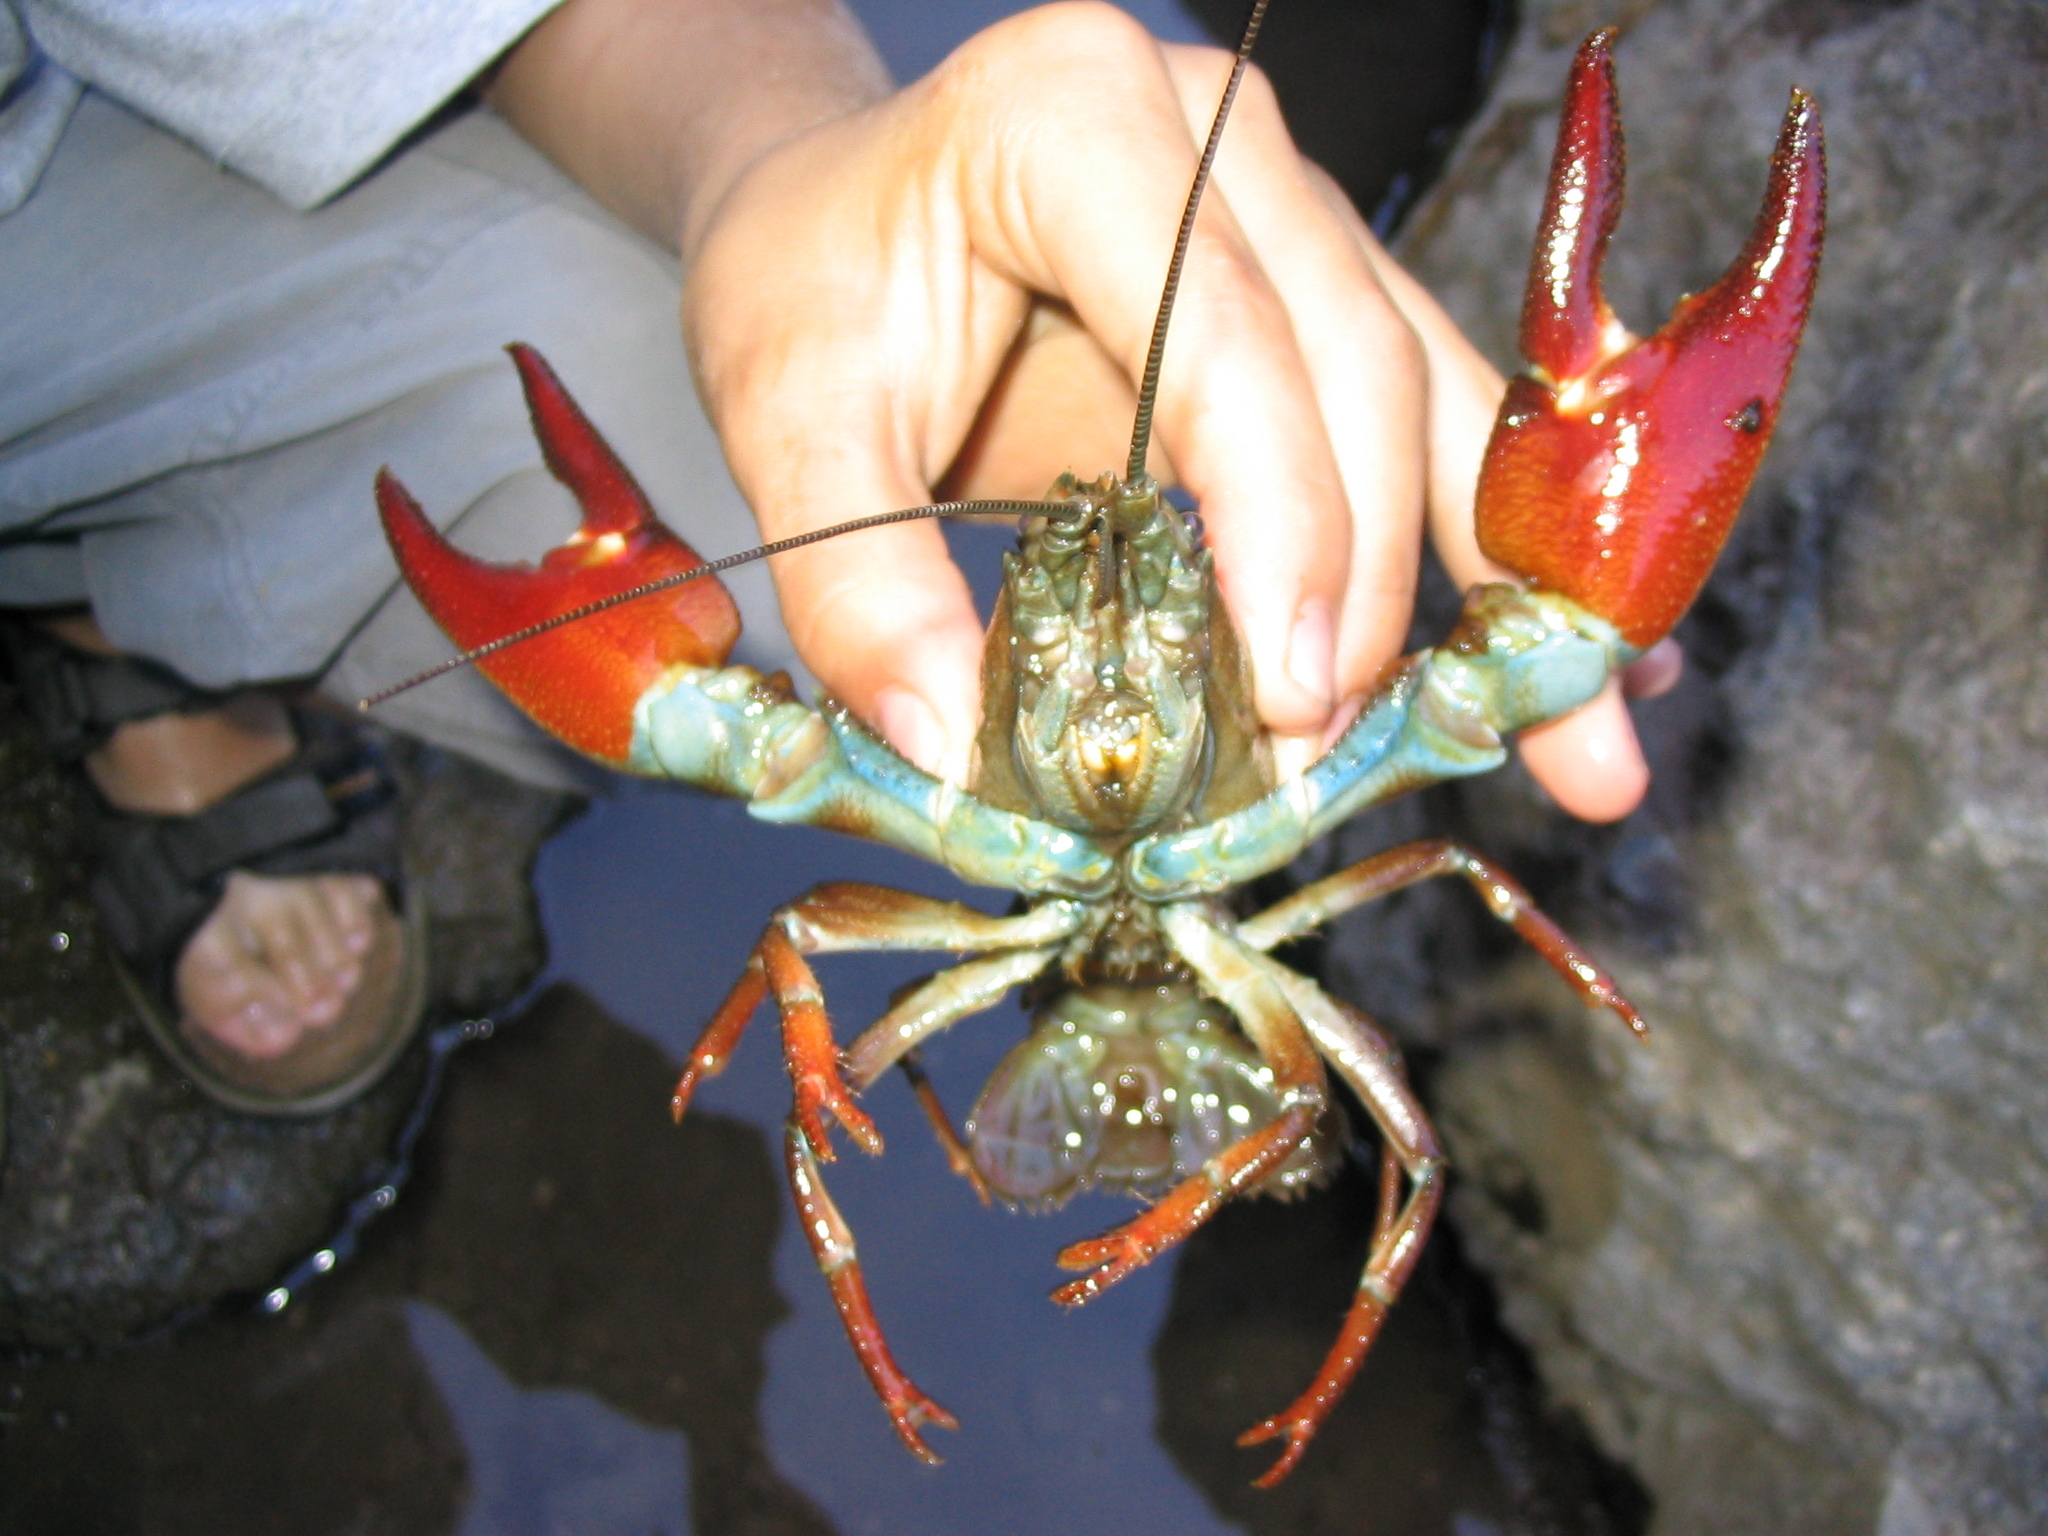 New invasive crayfish found in Minnesota